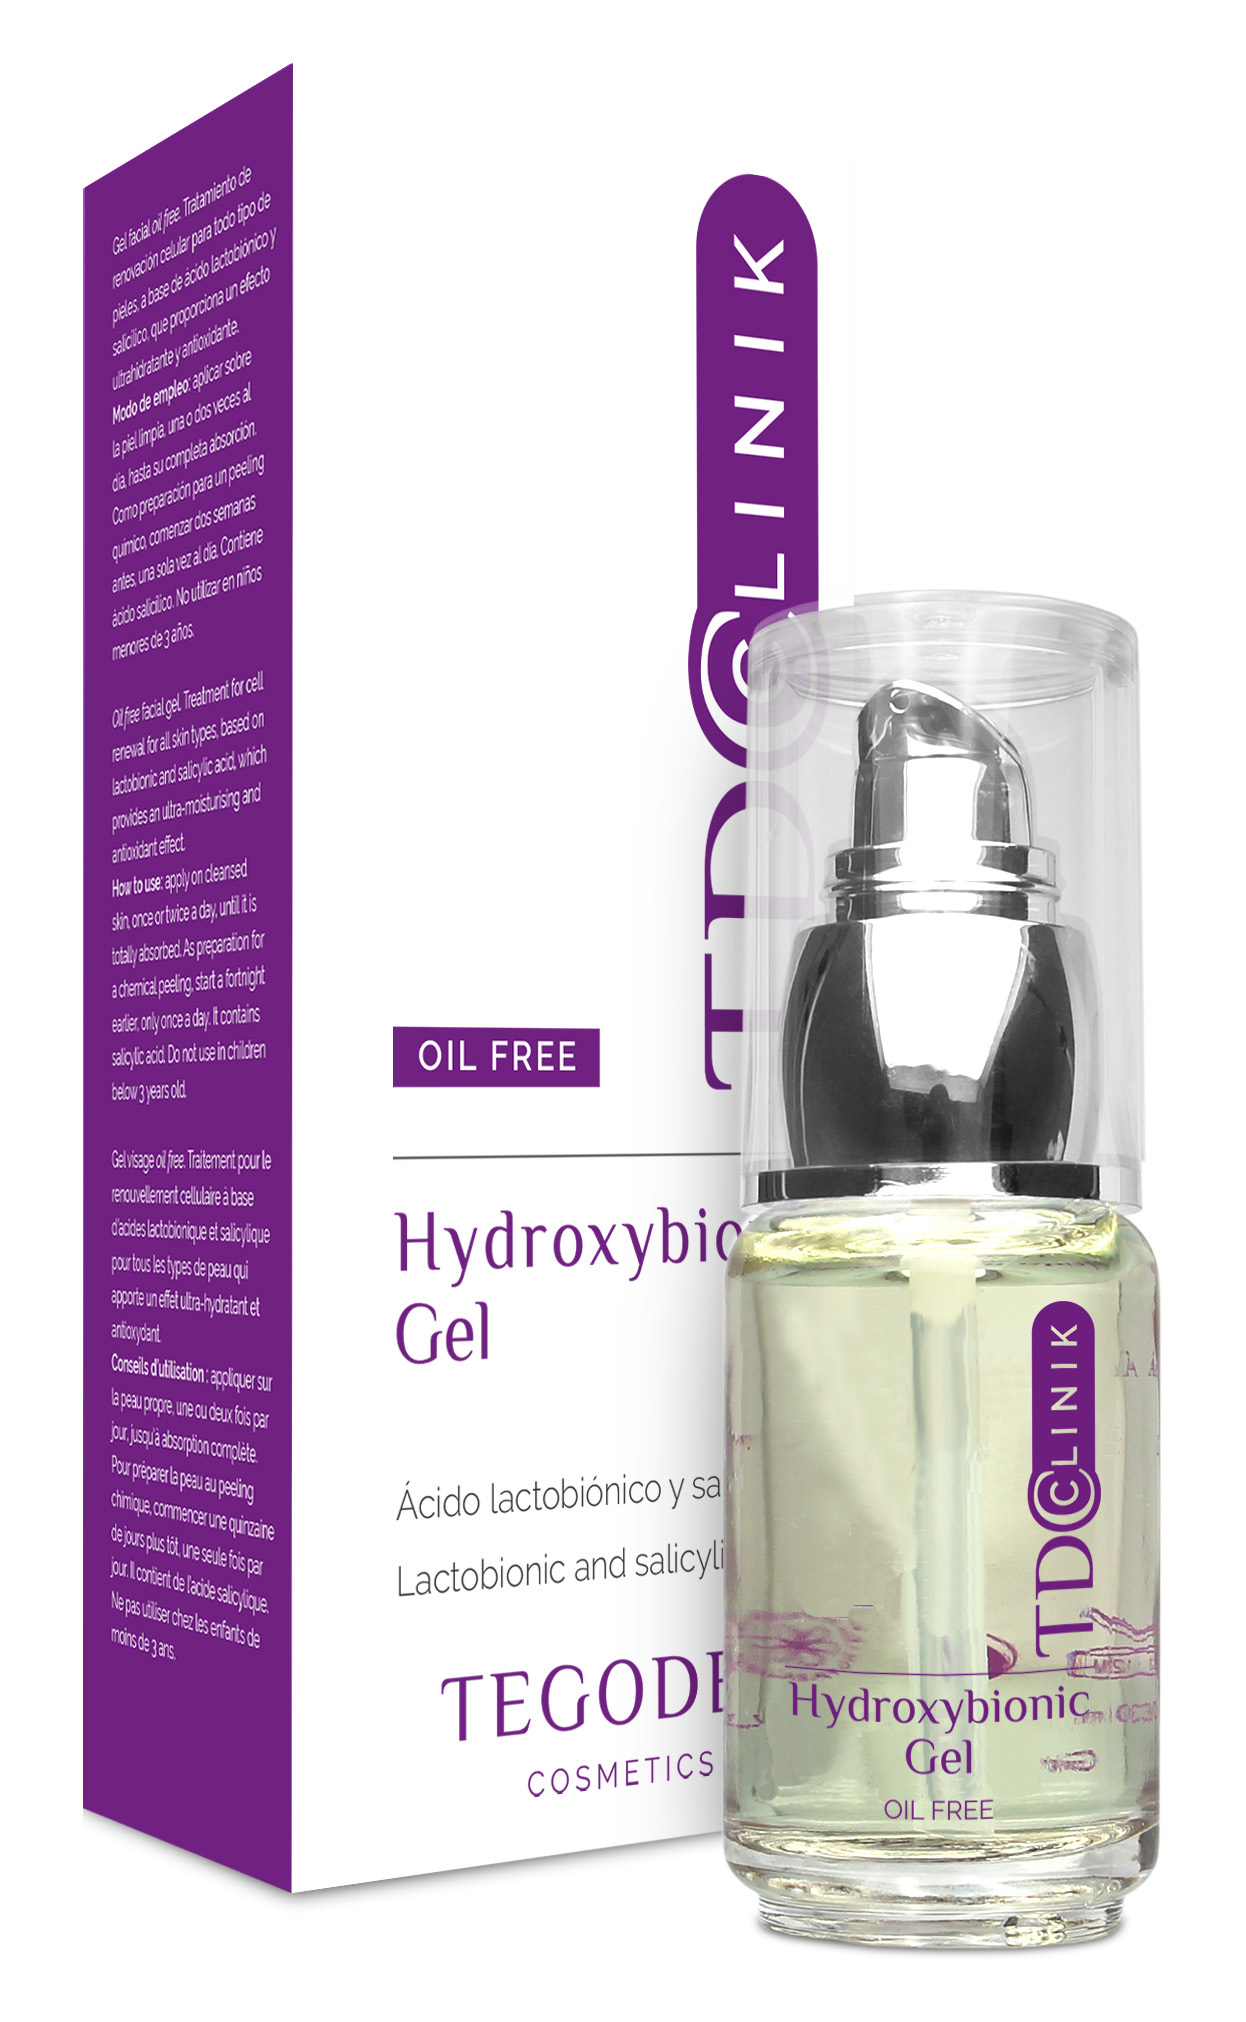 Hydroxybionic Gel, de Tegoder (50,30 euros).